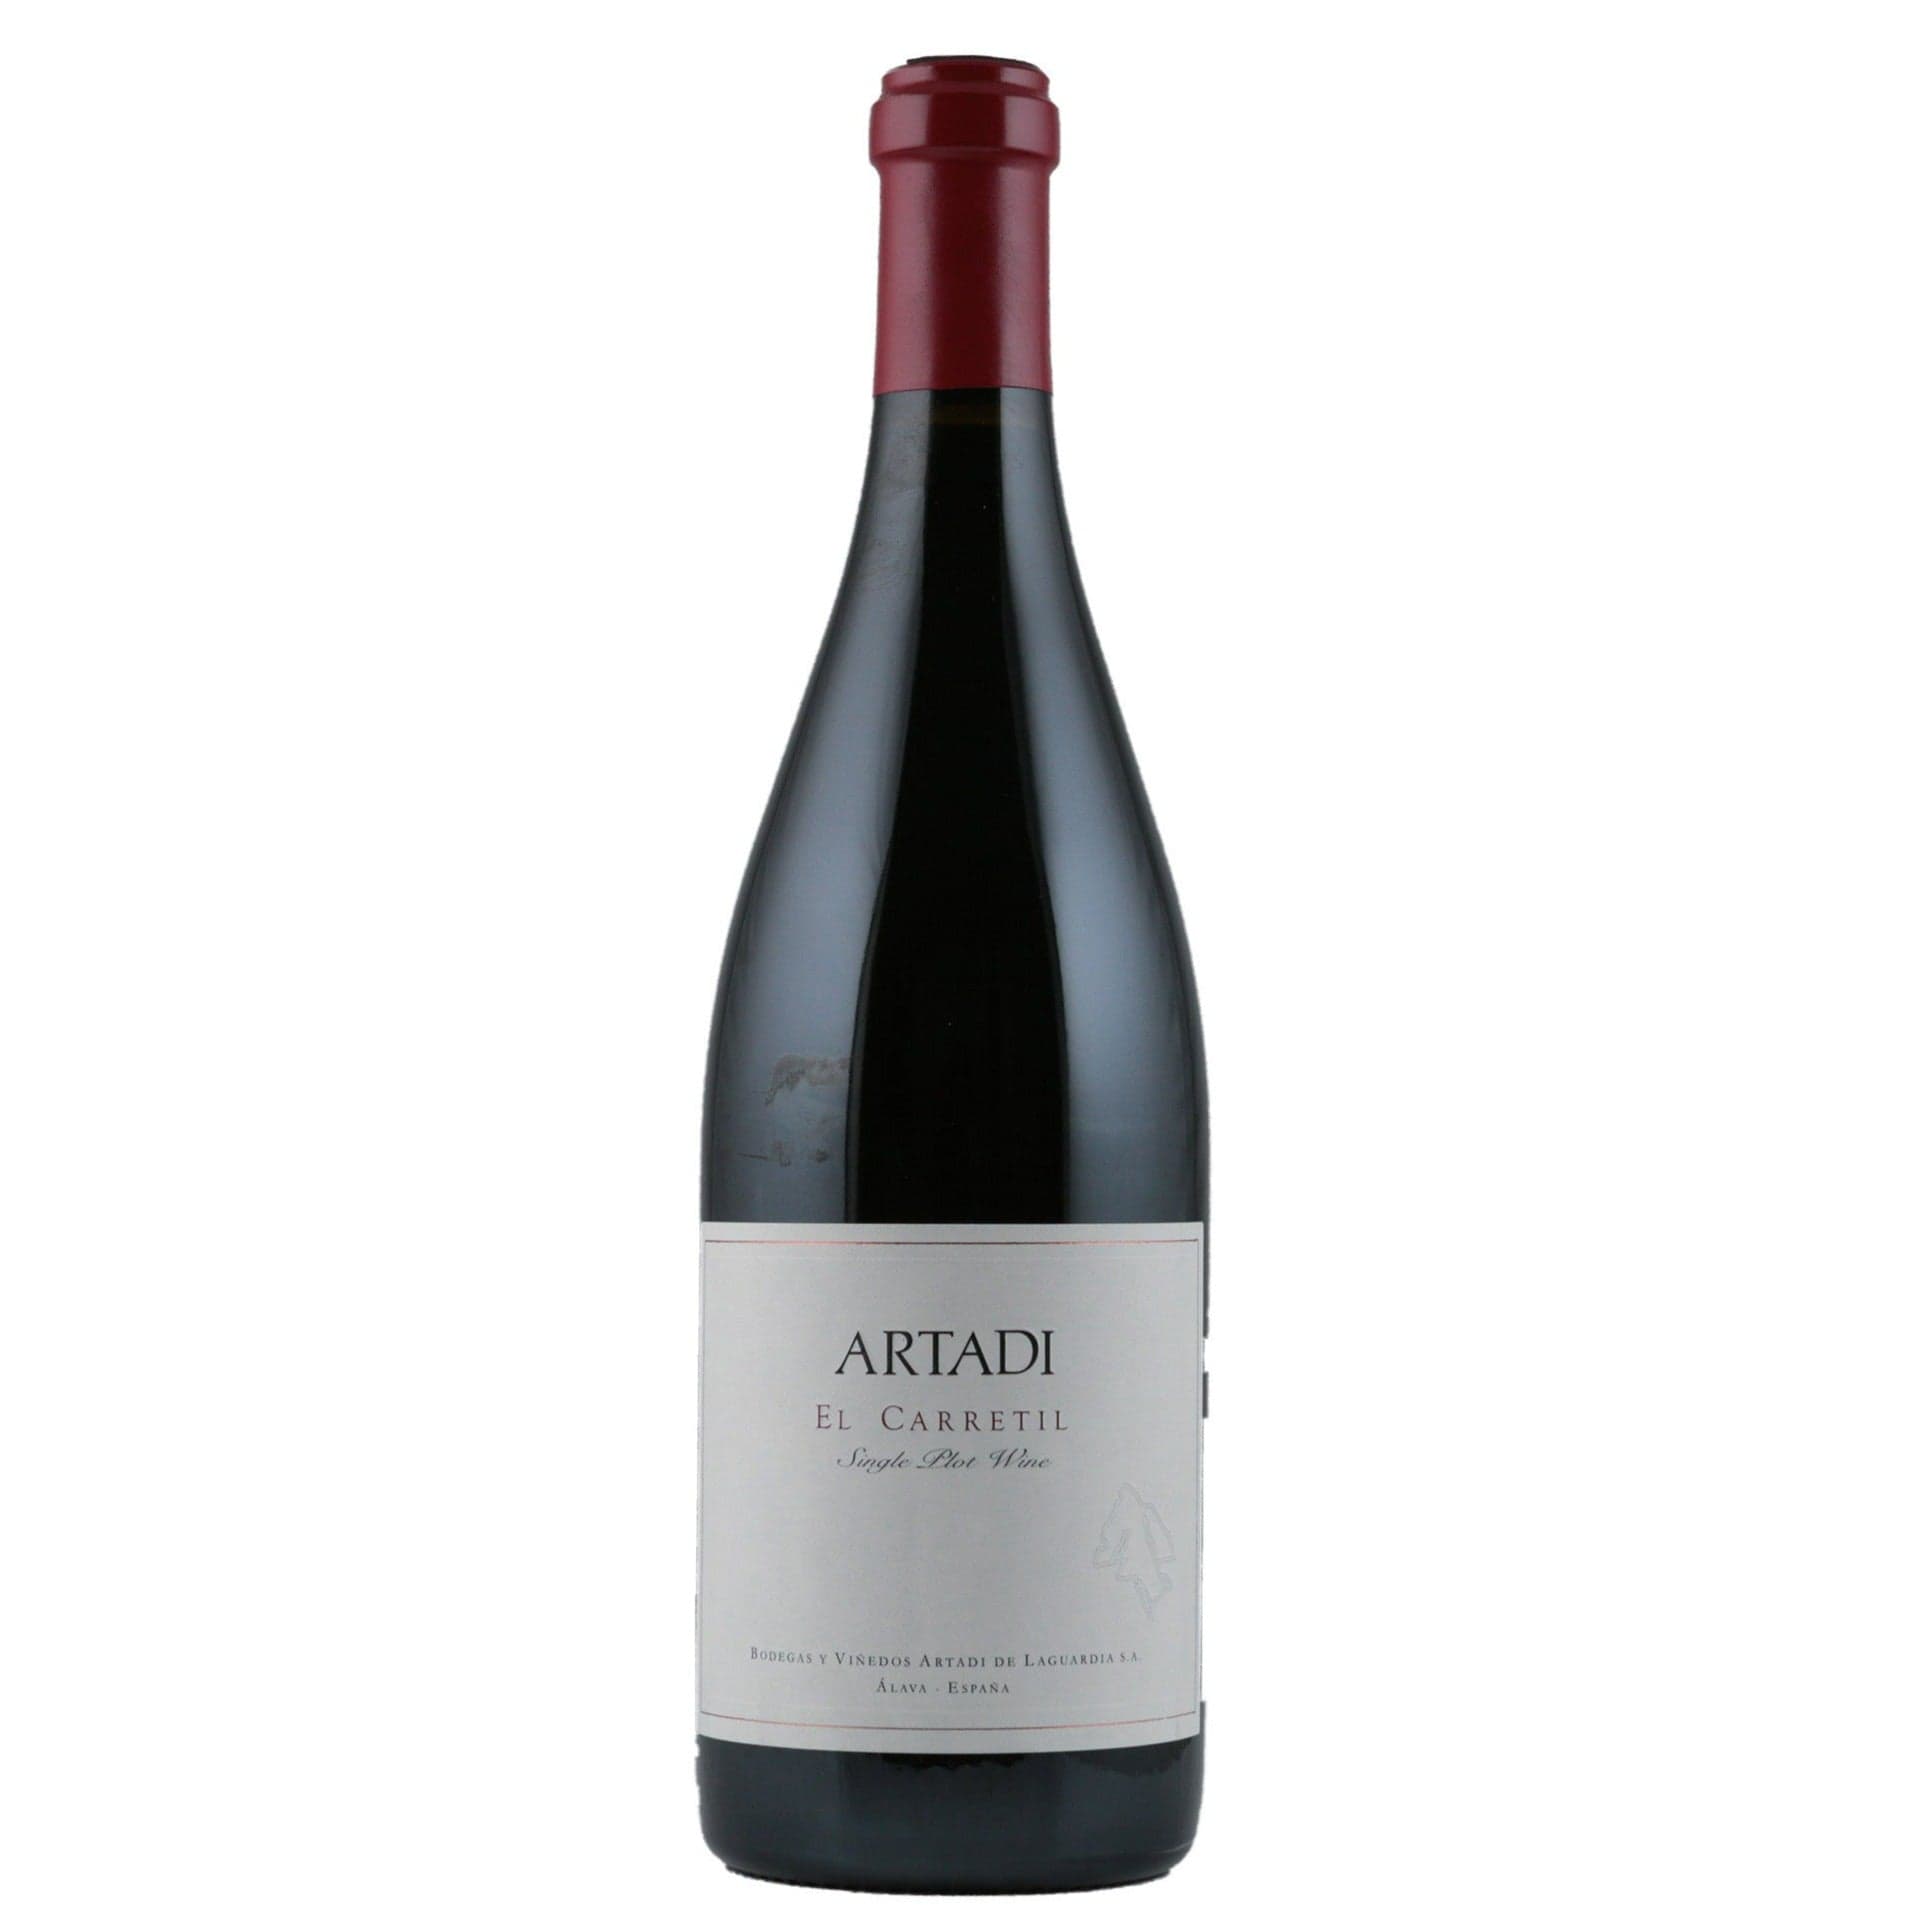 Single bottle of Red wine Artadi, El Carretil, Rioja Alavesa, 2019 100% Tempranillo